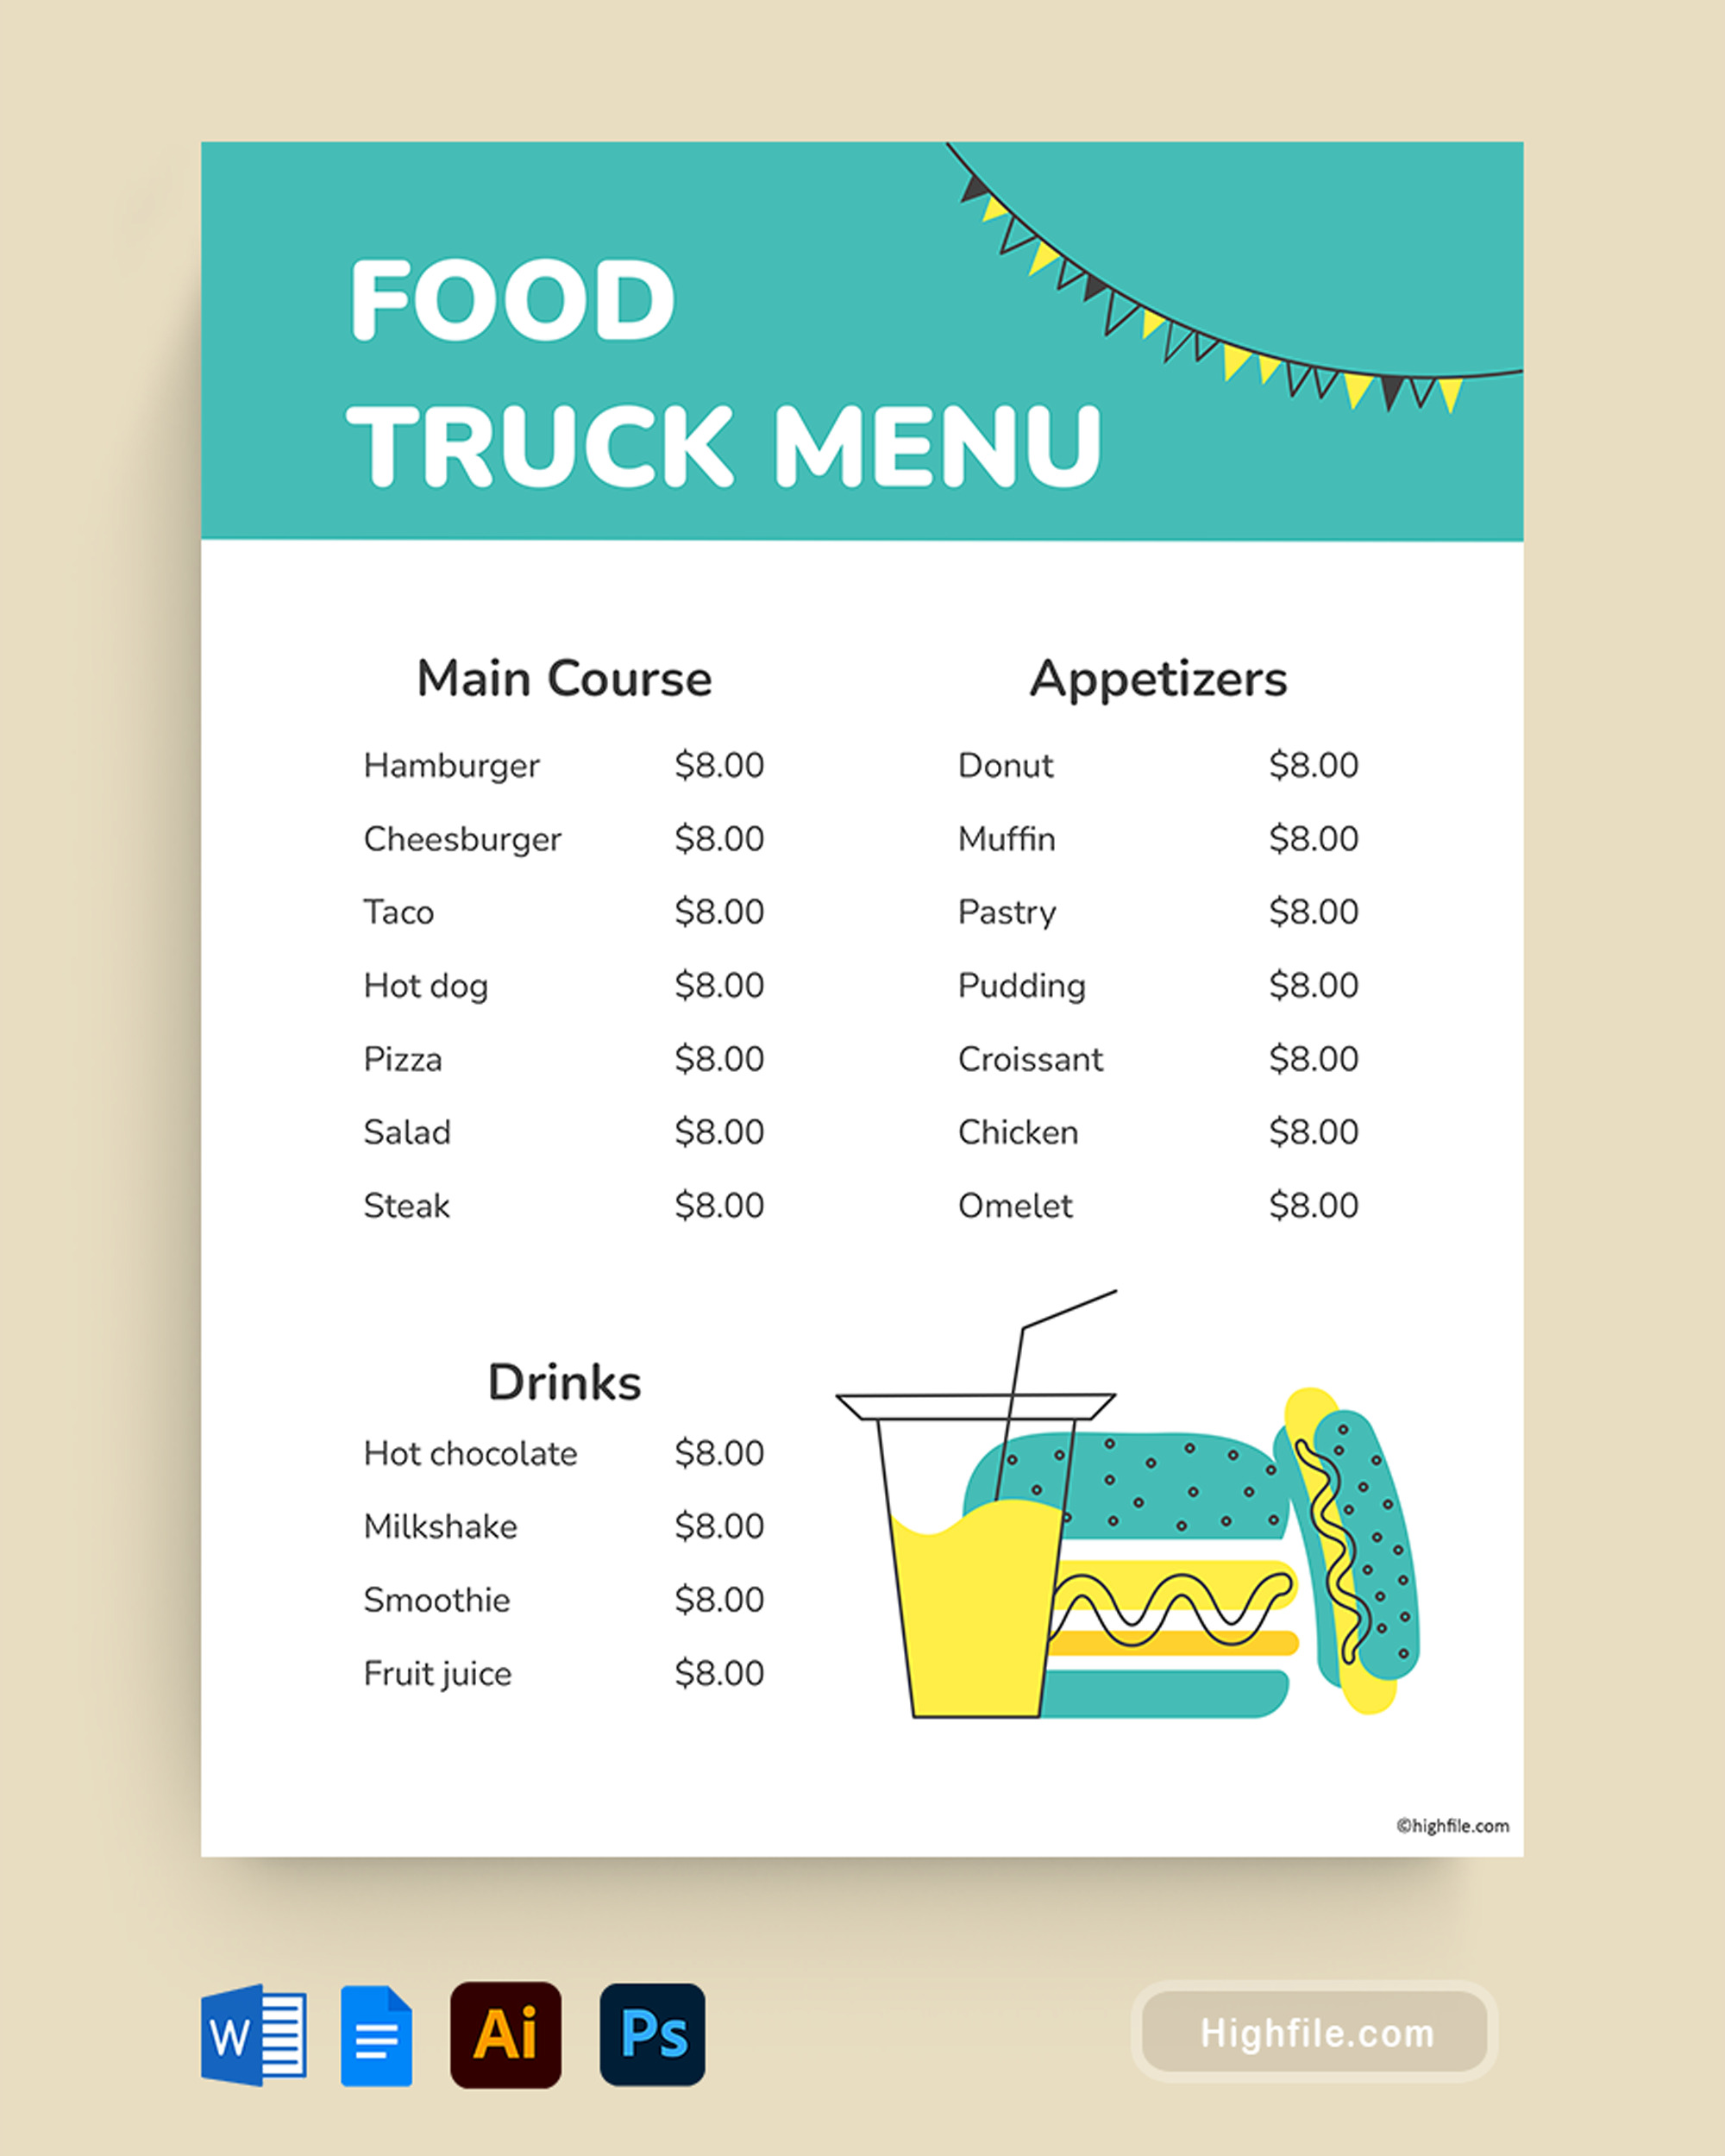 Food Truck Menu Template - Word, Google Docs, Adobe Illustrator, Adobe Photoshop